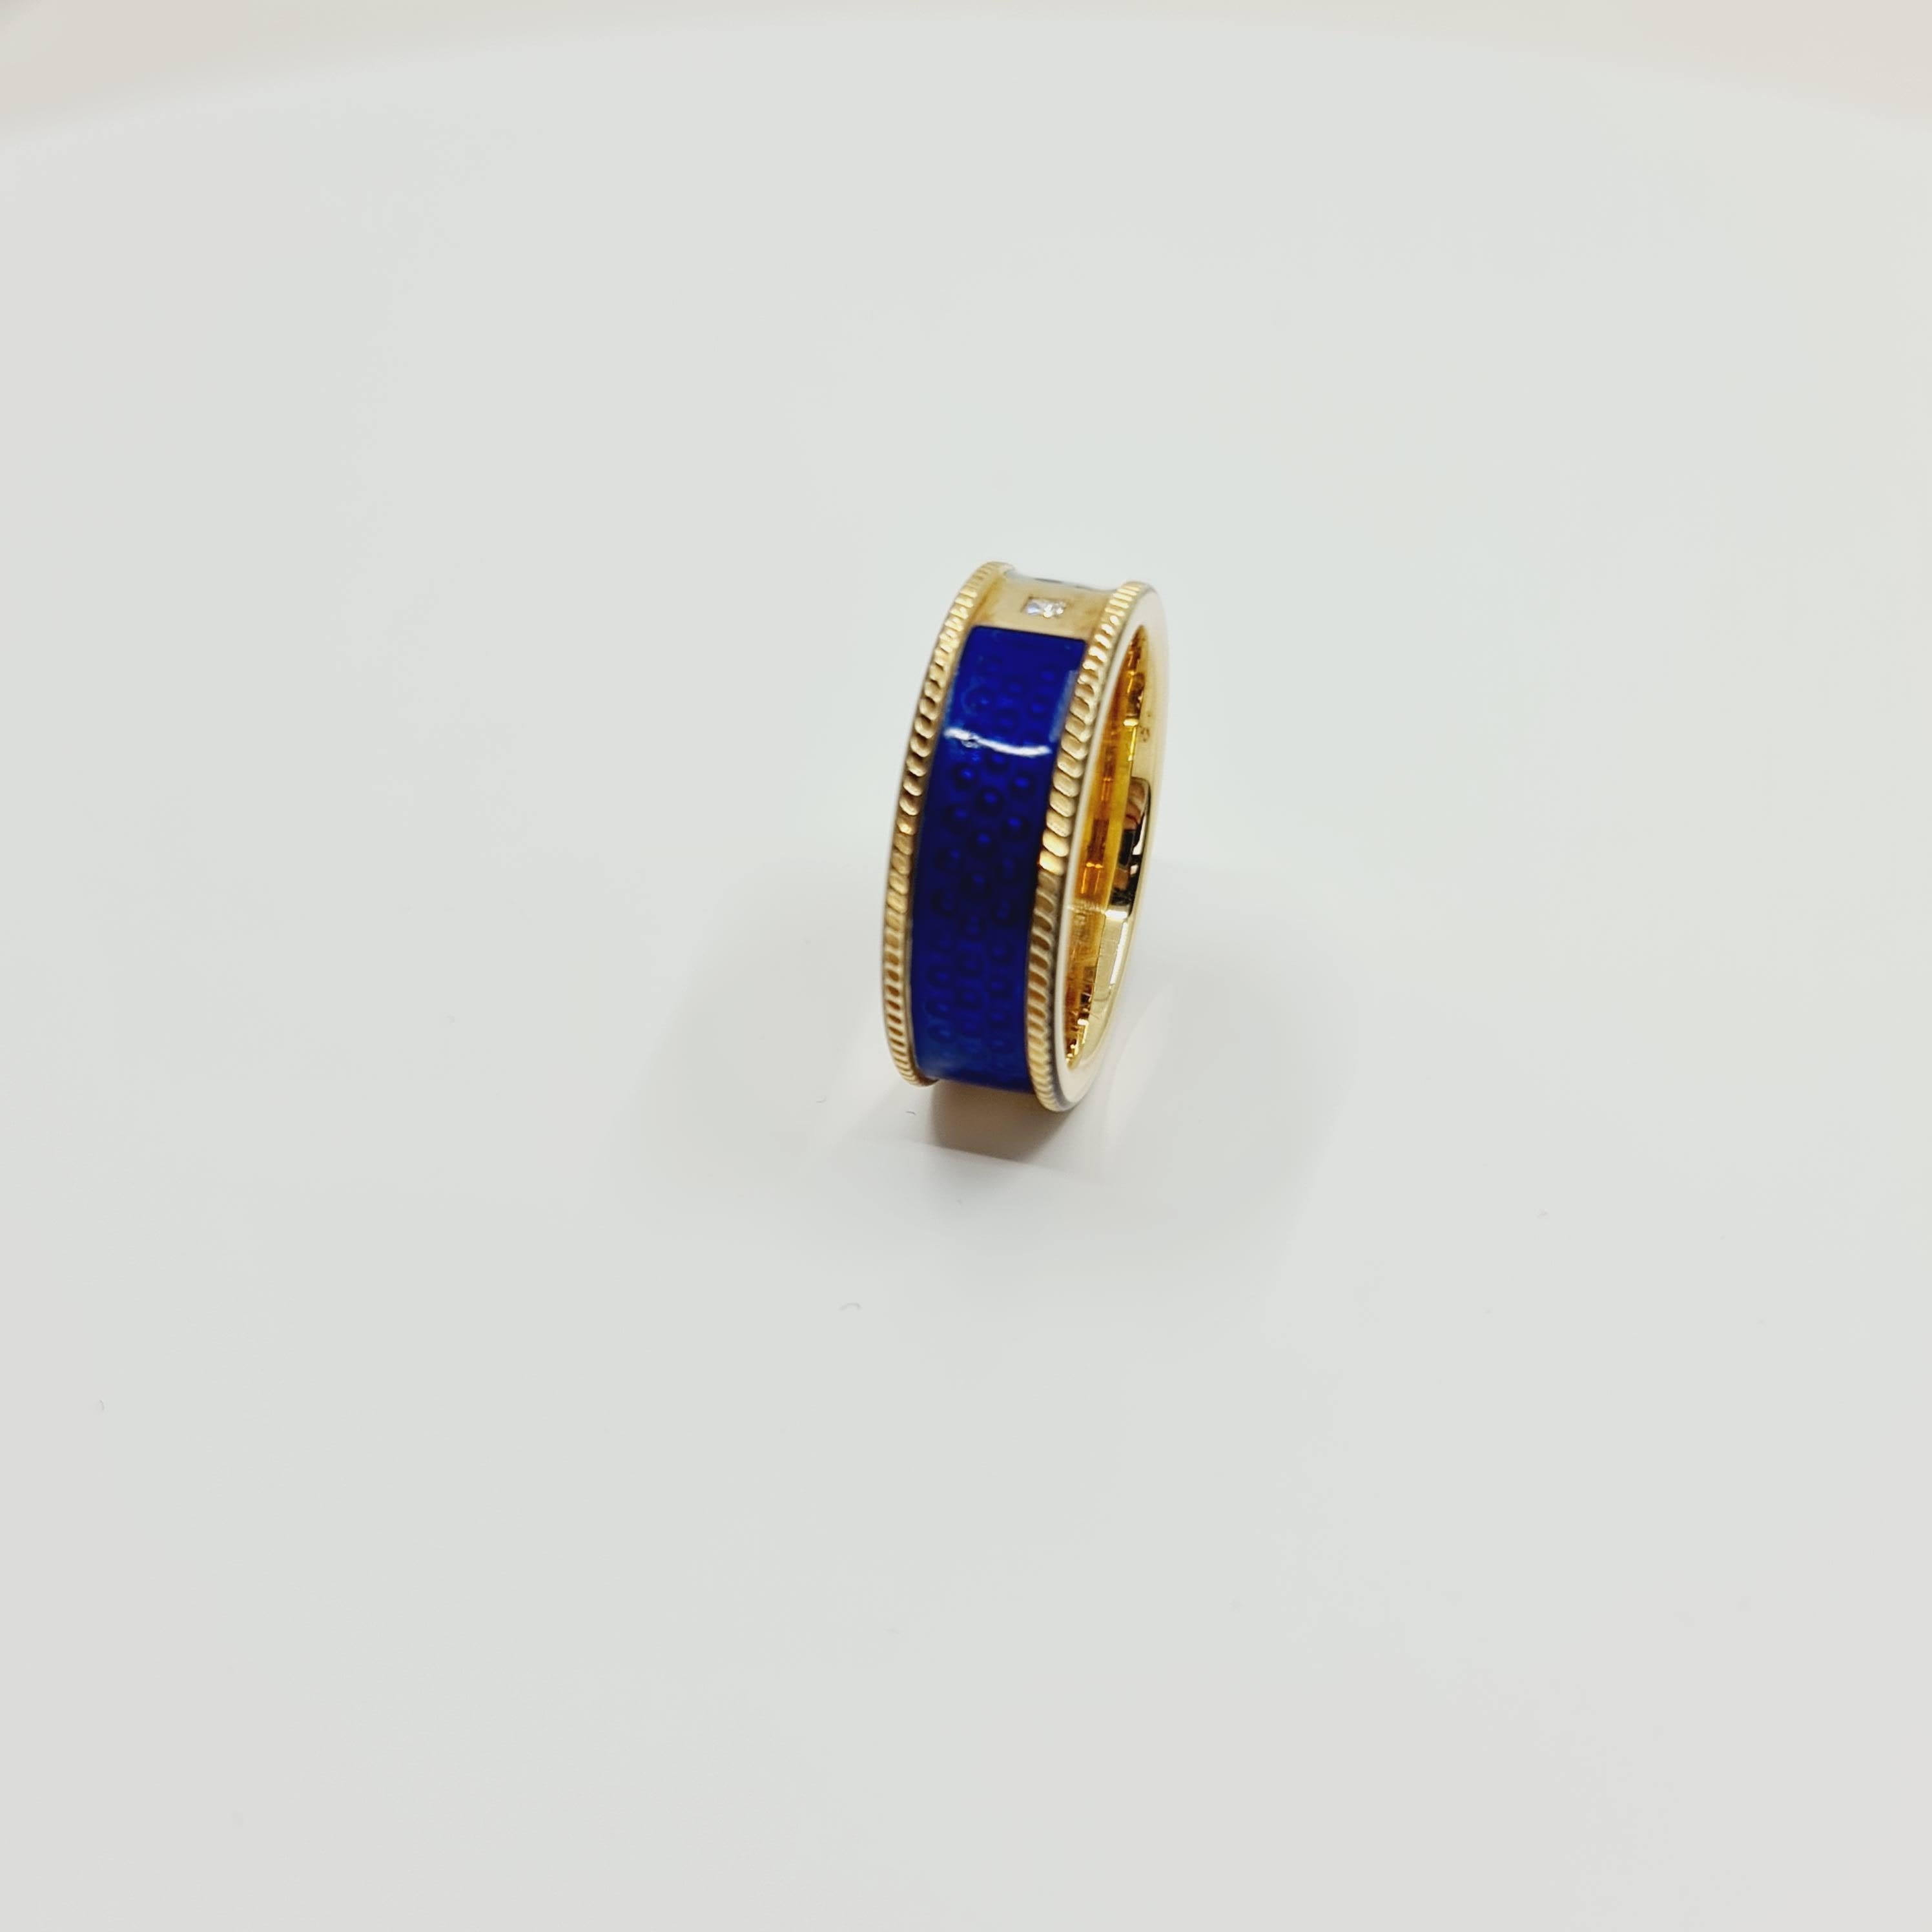 0.05 Carat Princess Cut Diamond Ring G/IF 14k Gold, Blue/Grey/White Enamel For Sale 3